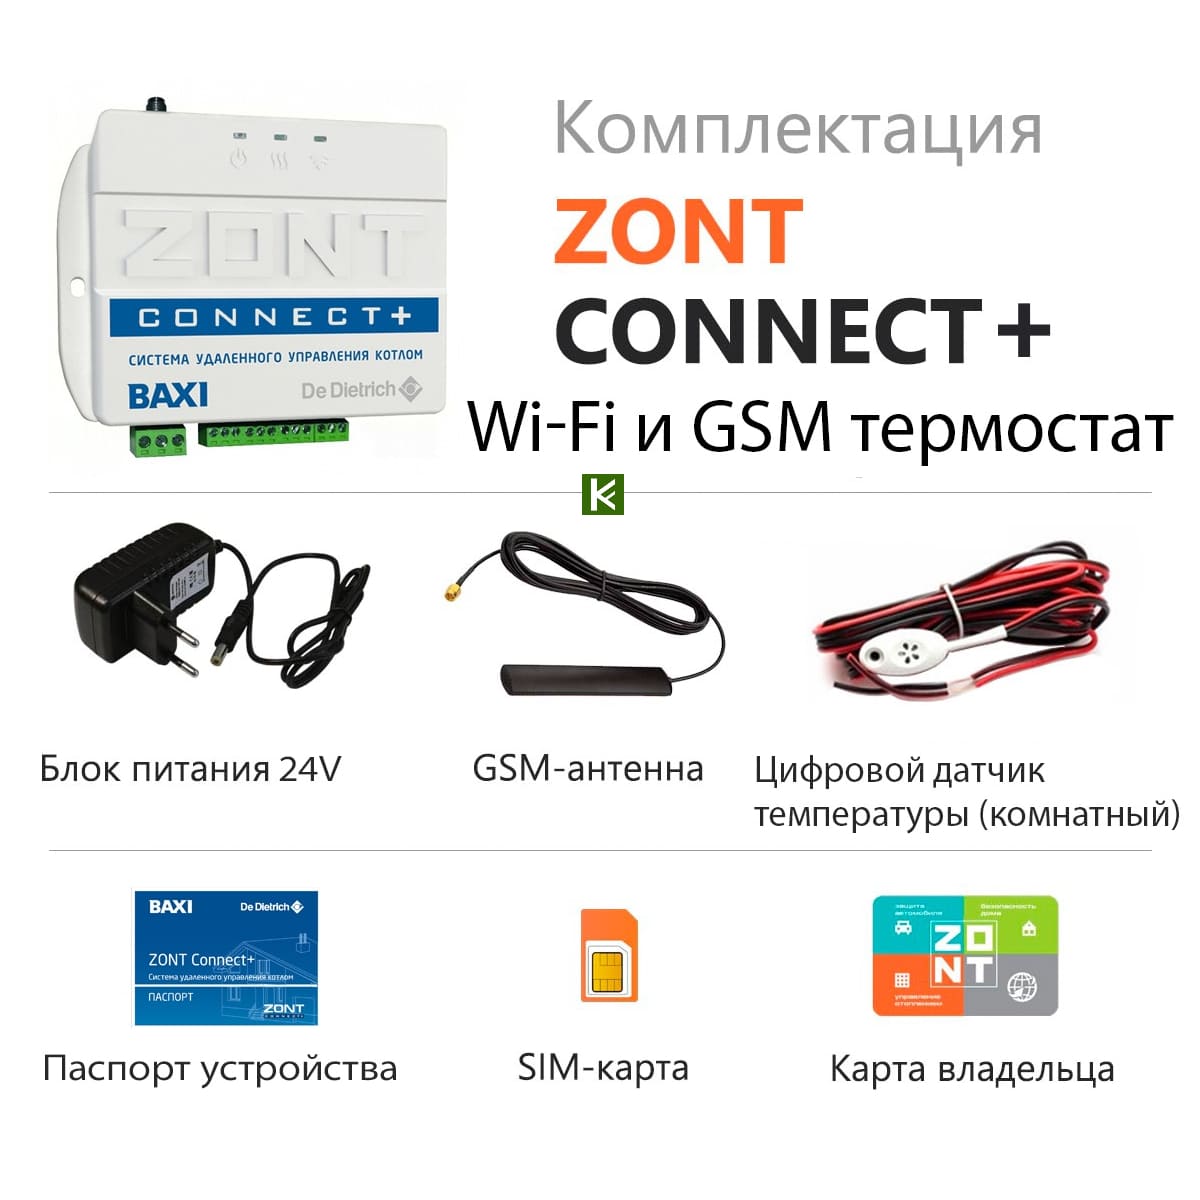 Baxi zont connect. Zont connect Baxi. Система удаленного управления котлом Baxi connect+. Zont connect+ GSM термостат для газовых котлов Baxi. Система удаленного управления котлом Zont Baxi connect+ (ml00004934).